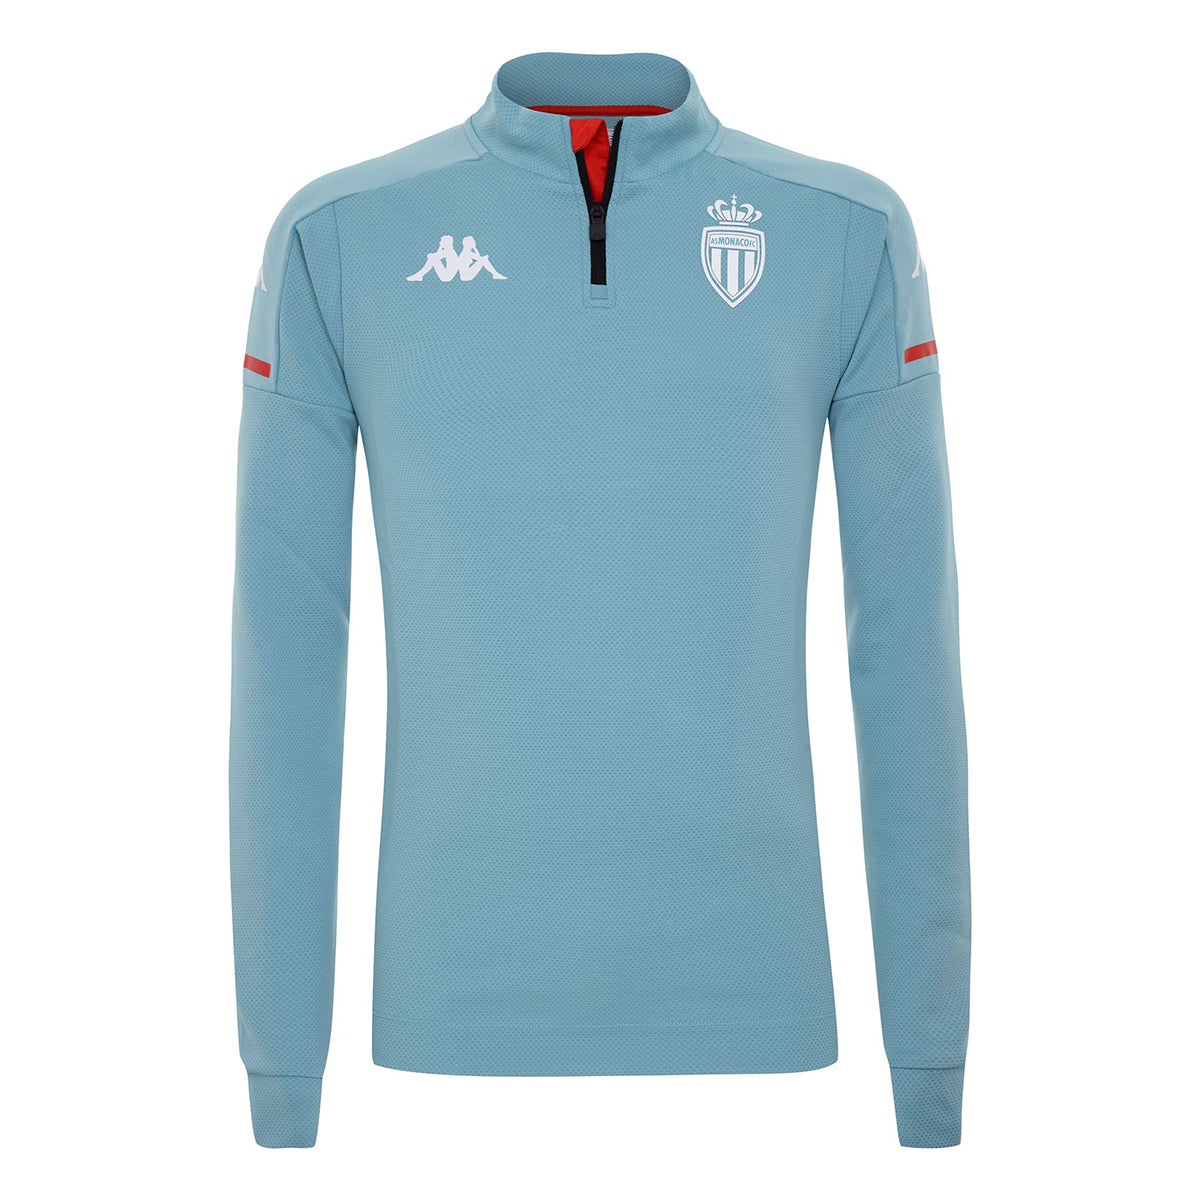 Sweatshirt Ablas Pro 4 As Monaco Bleu Homme - image 1